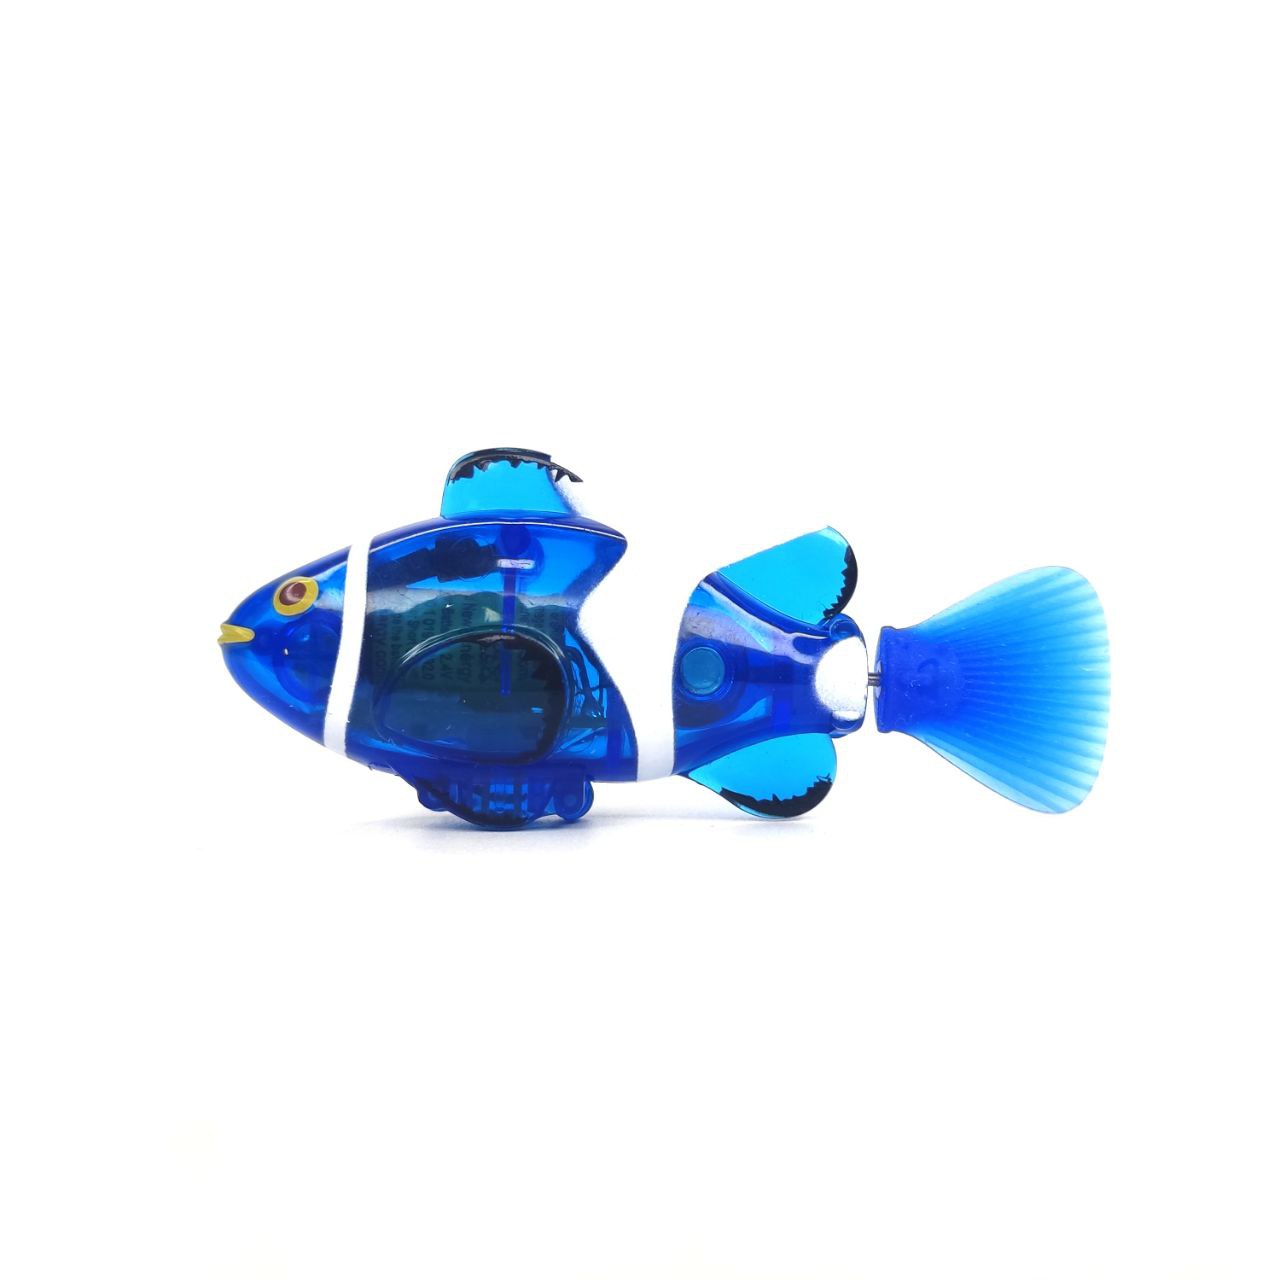 Радиоуправляемая рыбка Create Toys Clown Fish 27Mhz 3316-BLUE радиоуправляемая машинка create toys crazon ghost cr 172802